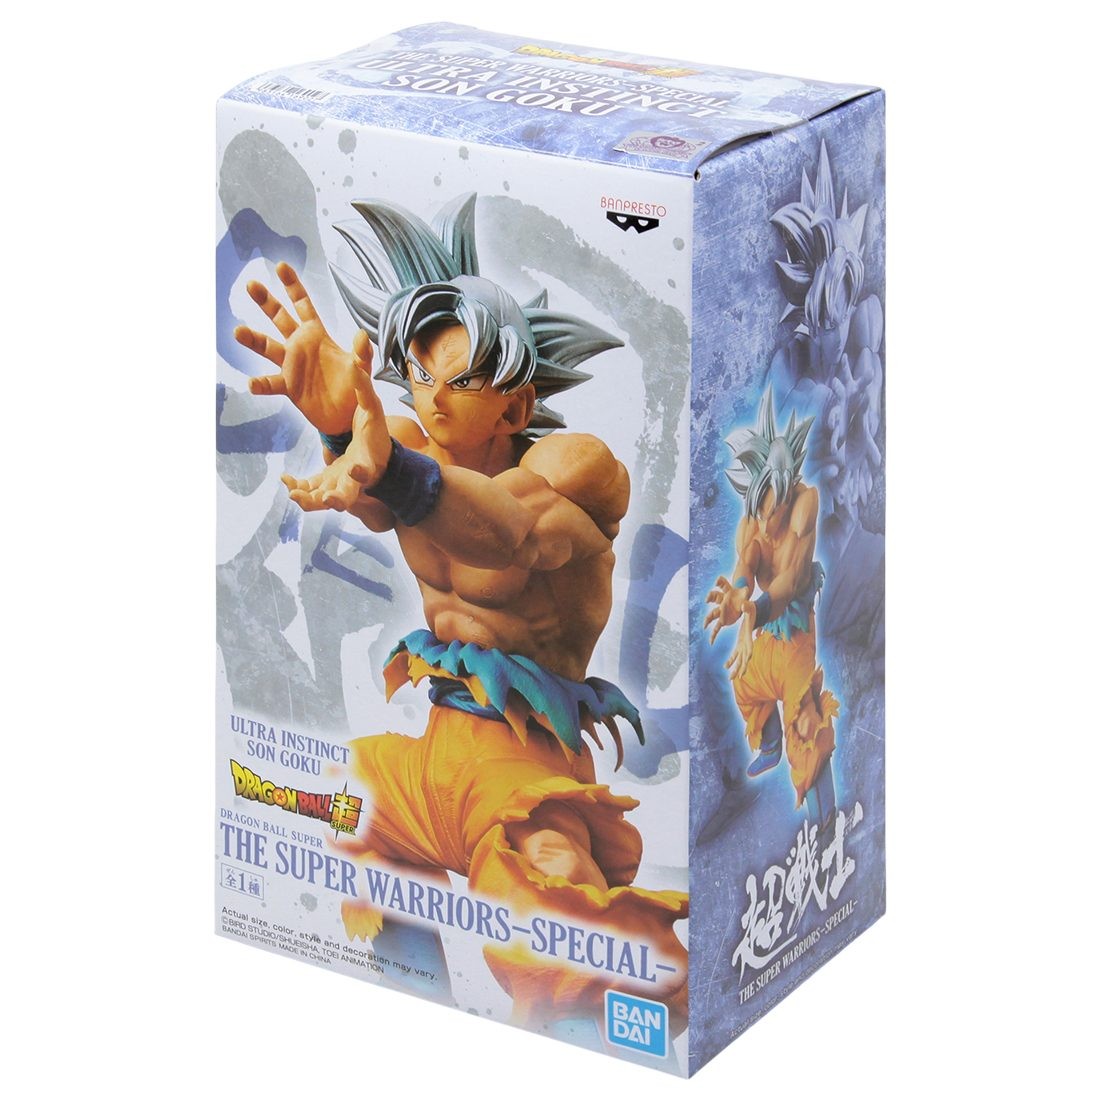 Action Figure Dragon Ball Super Ultra Instinto Superior Goku Banpresto  Multicores